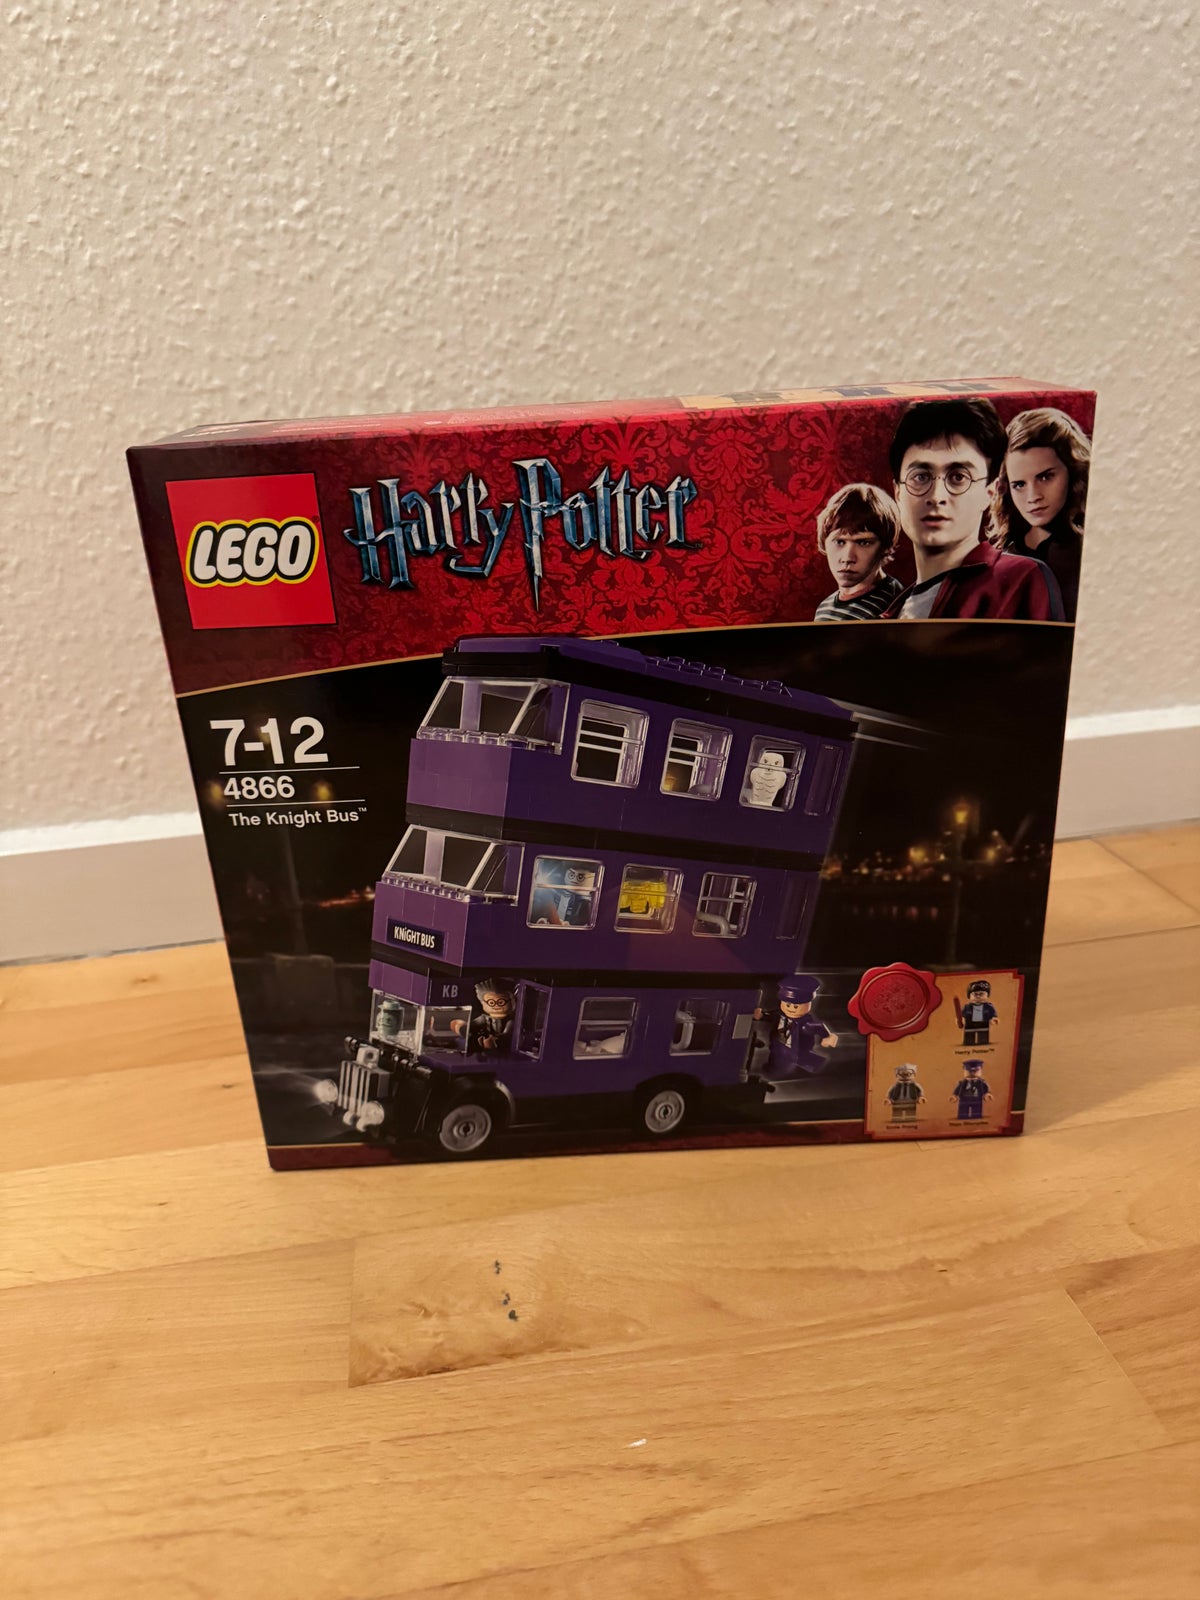 Lego Harry Potter, 4866 The Knight Bus